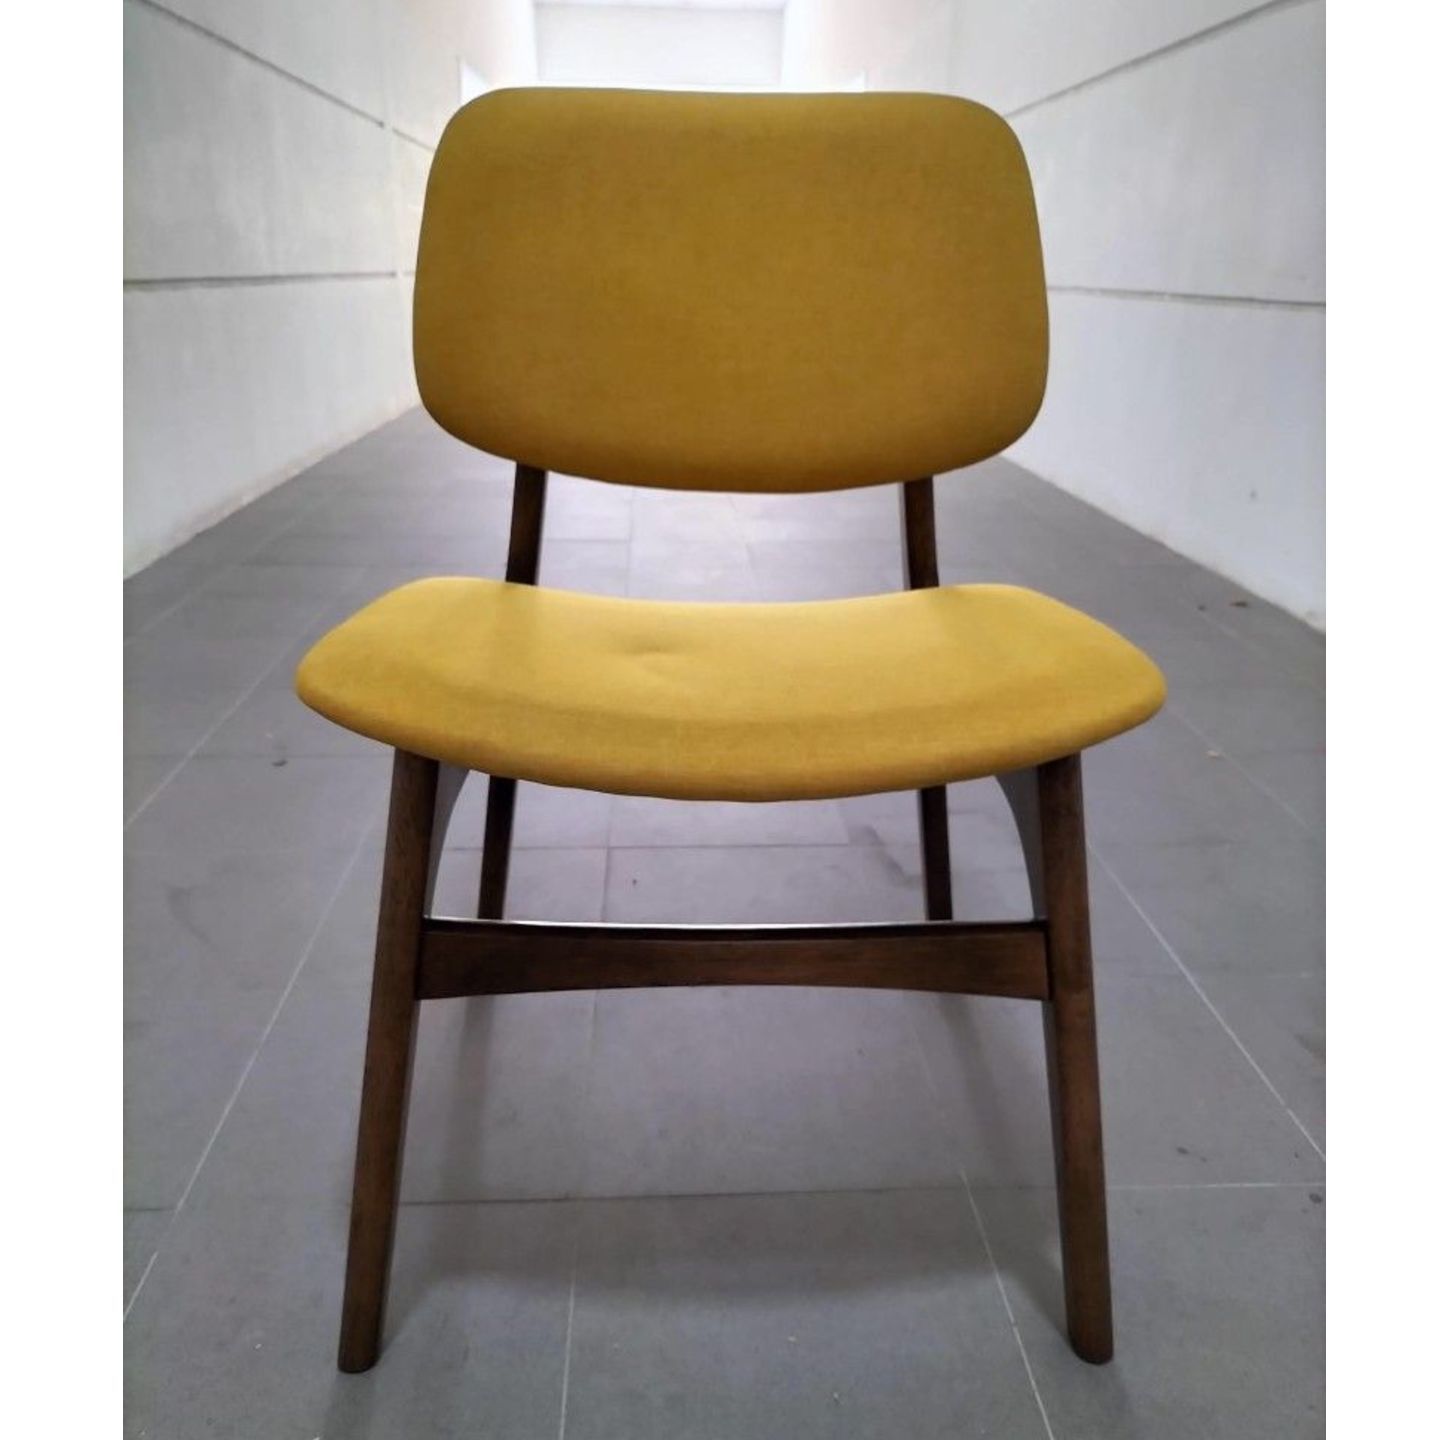 ROFA Solid Wood Chair in WALNUT & YELLOW FABRIC